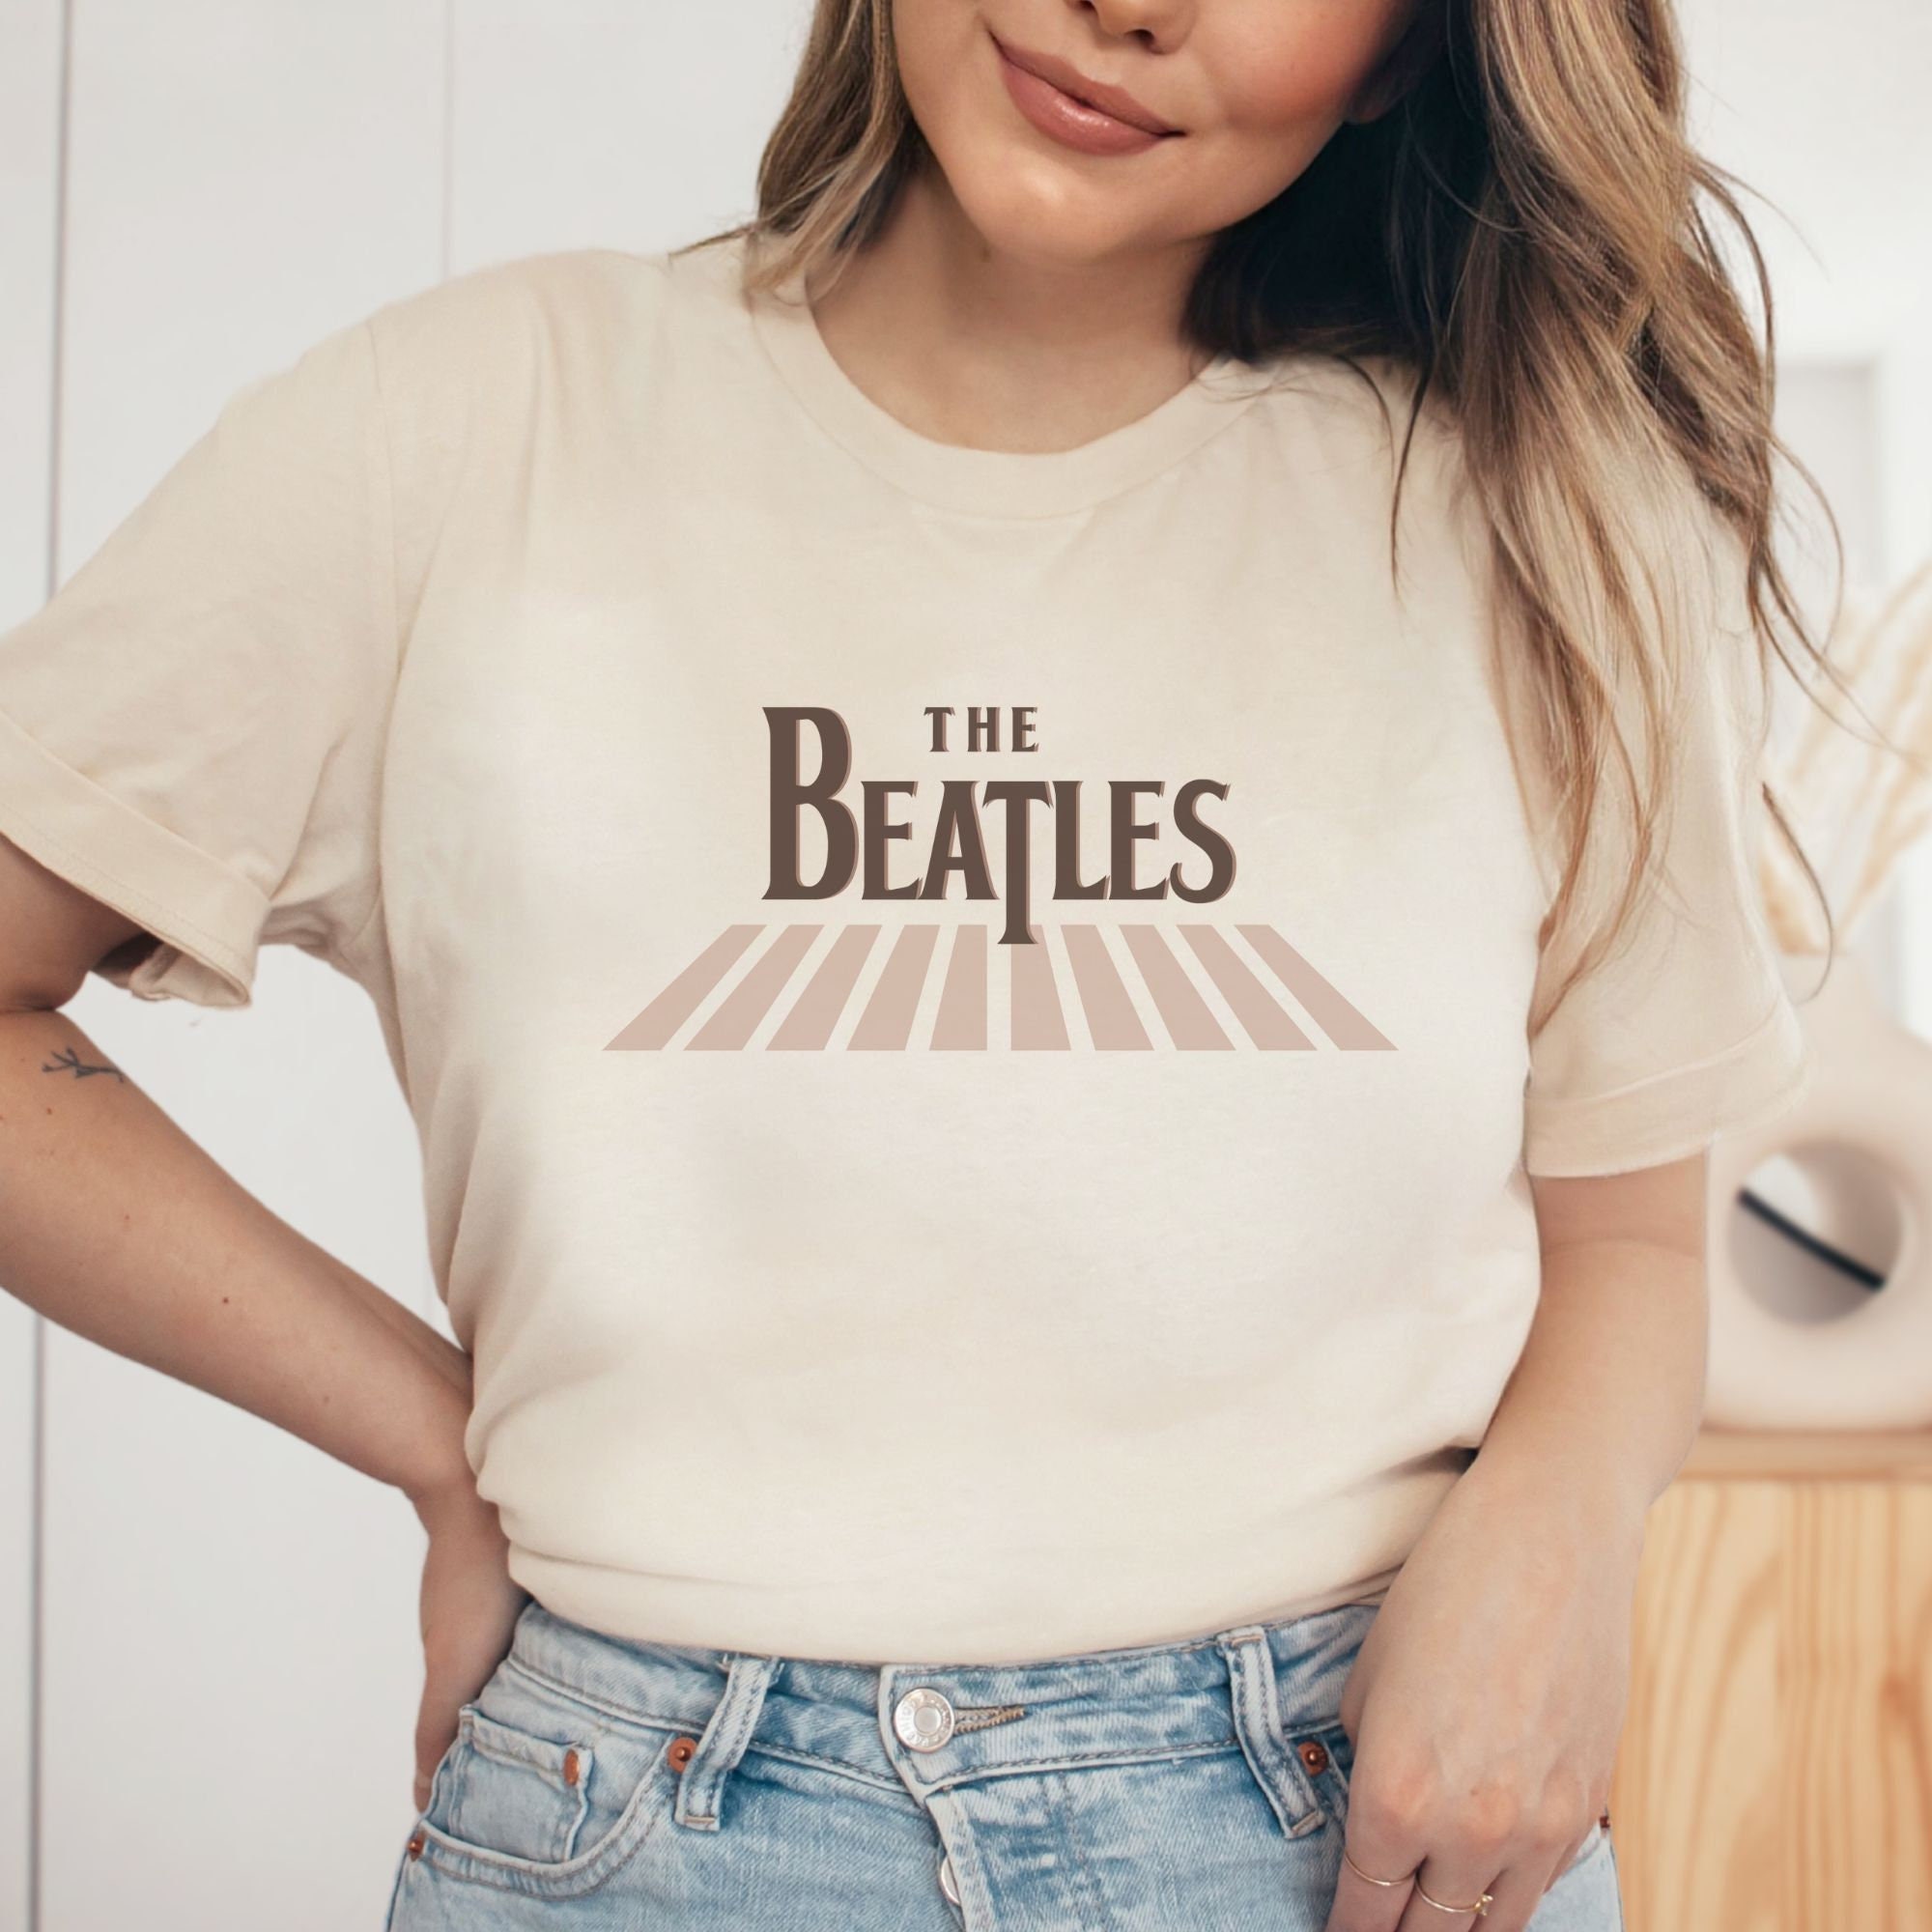 kindben Viva slå The Beatles Tshirt Women Beatles Merch Shirt Classic Beatles - Etsy